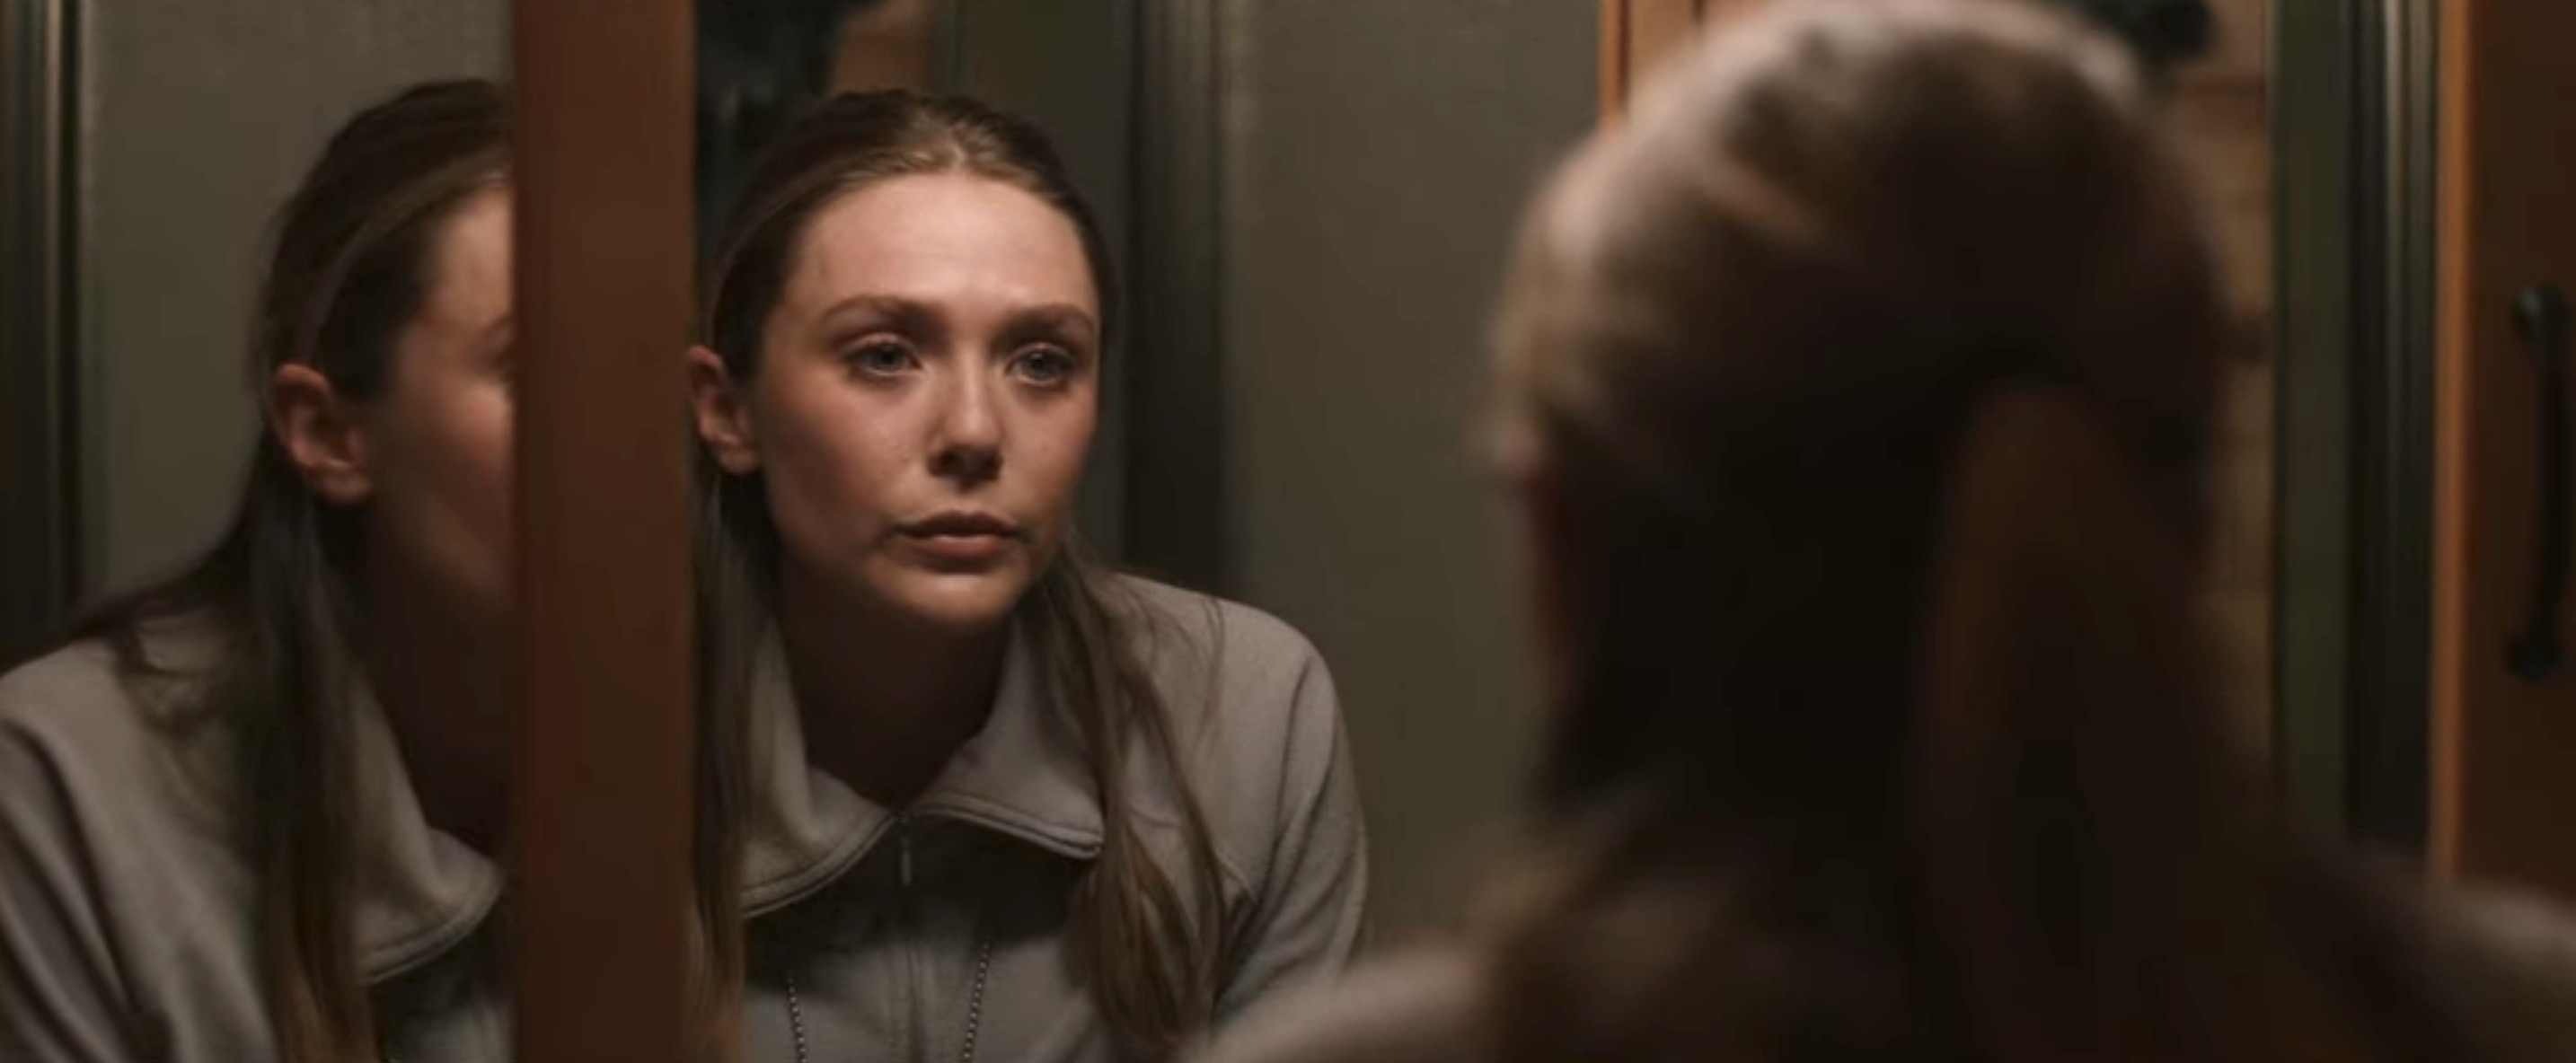 Wind River Cast (2017 Movie) - Elizabeth Olsen as Jane Banne